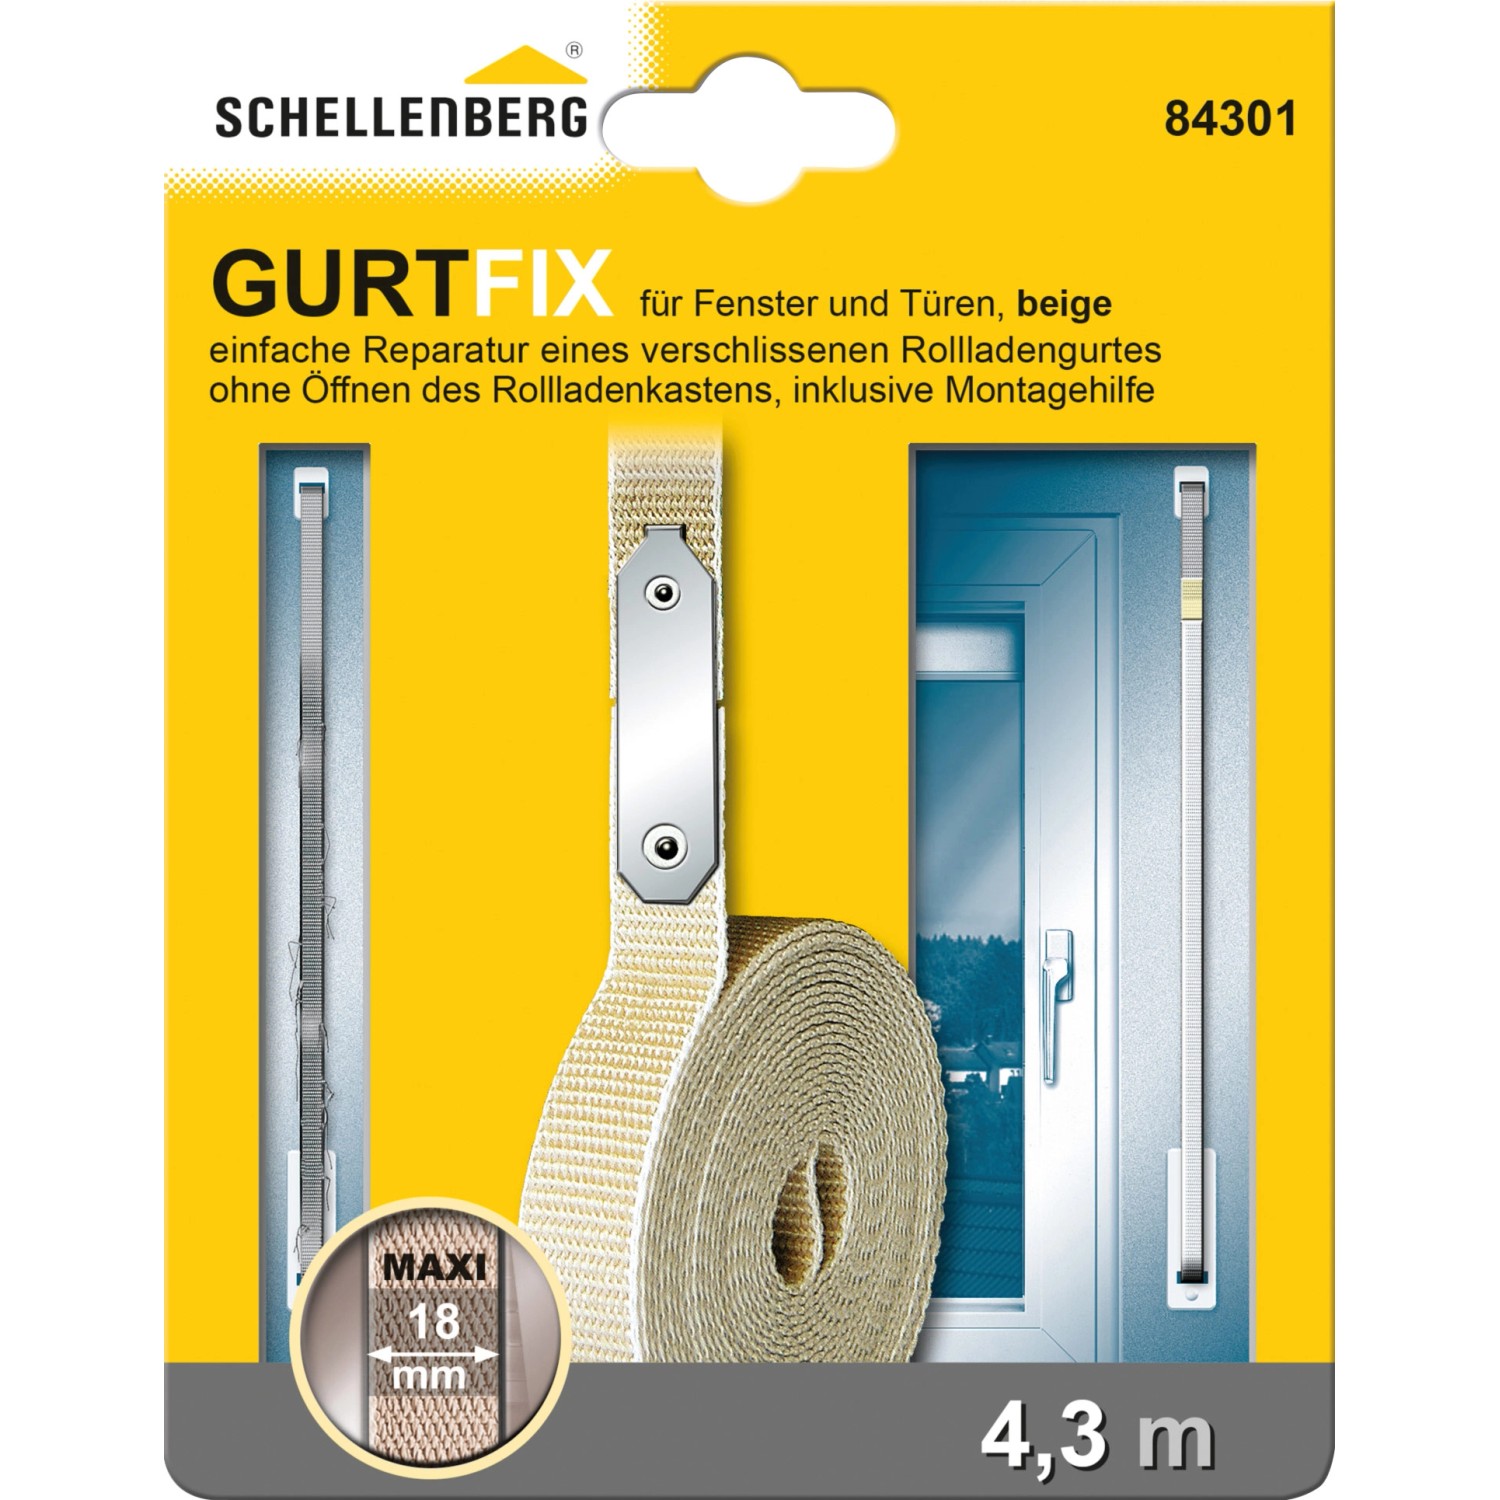 Maxi Schellenberg mm 18 Beige Reparaturset Gurtfix